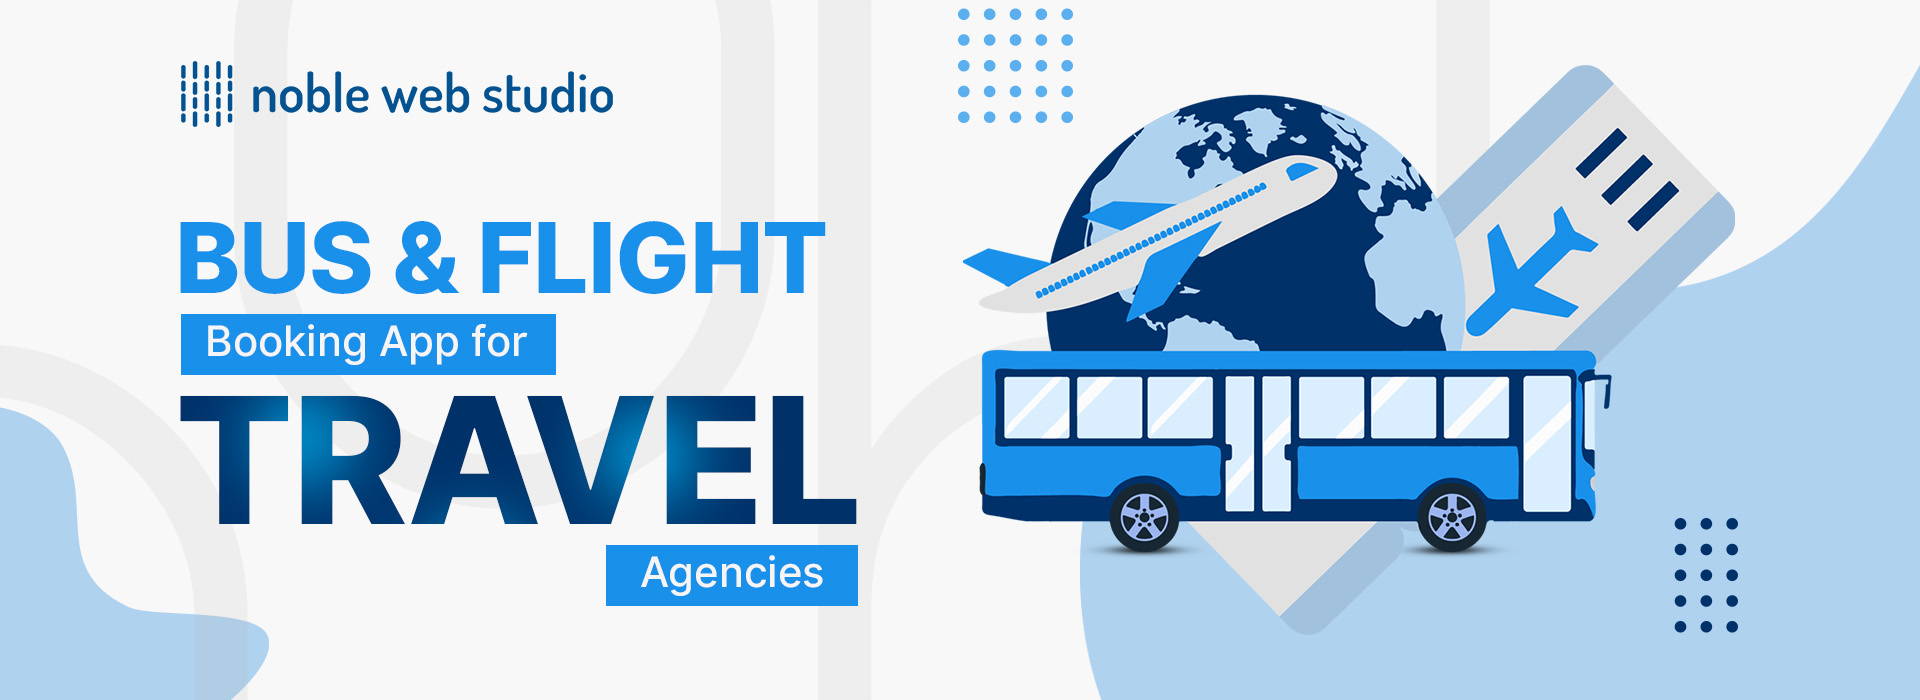 Bus & Flight Booking App for Travel Agencies